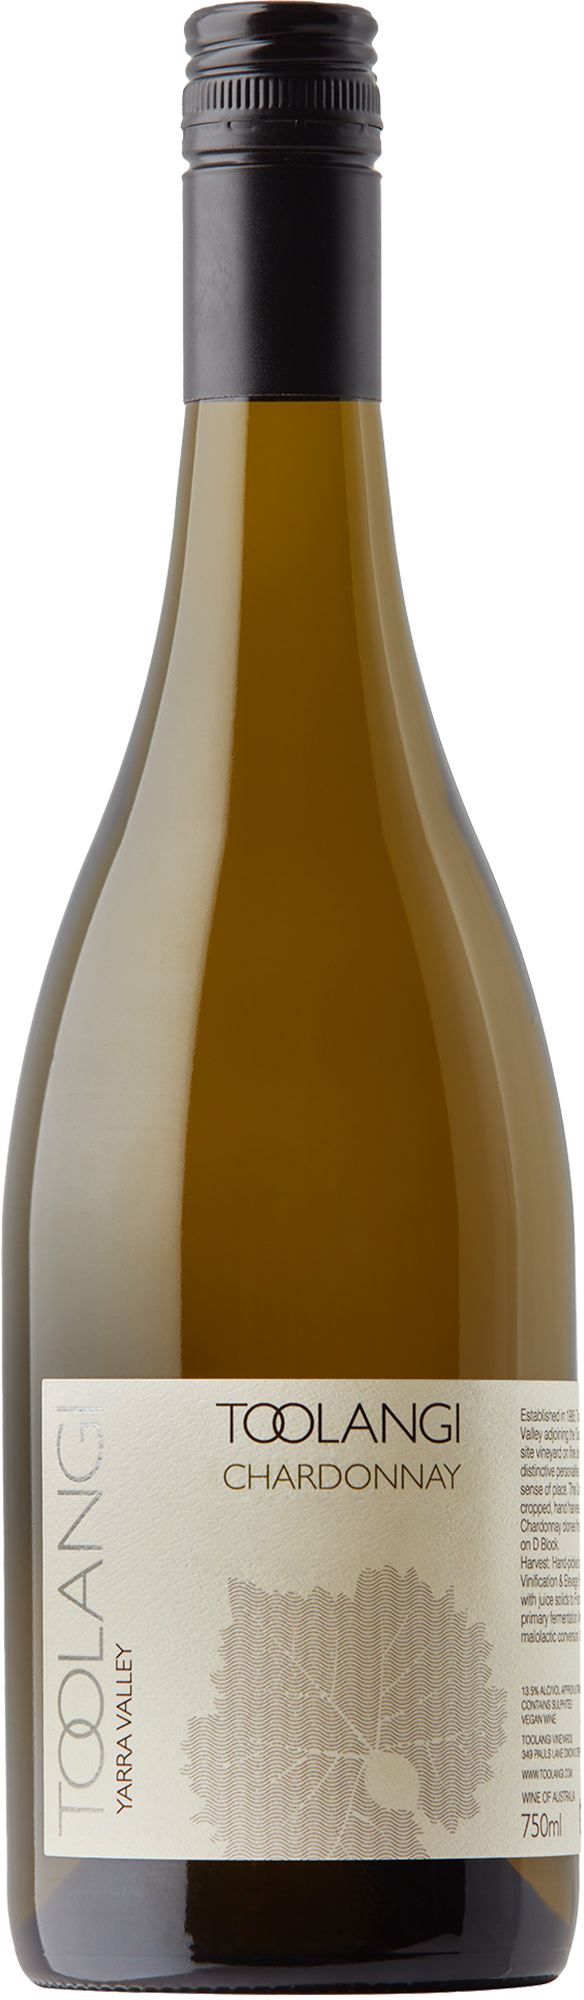 Toolangi Chardonnay 2020